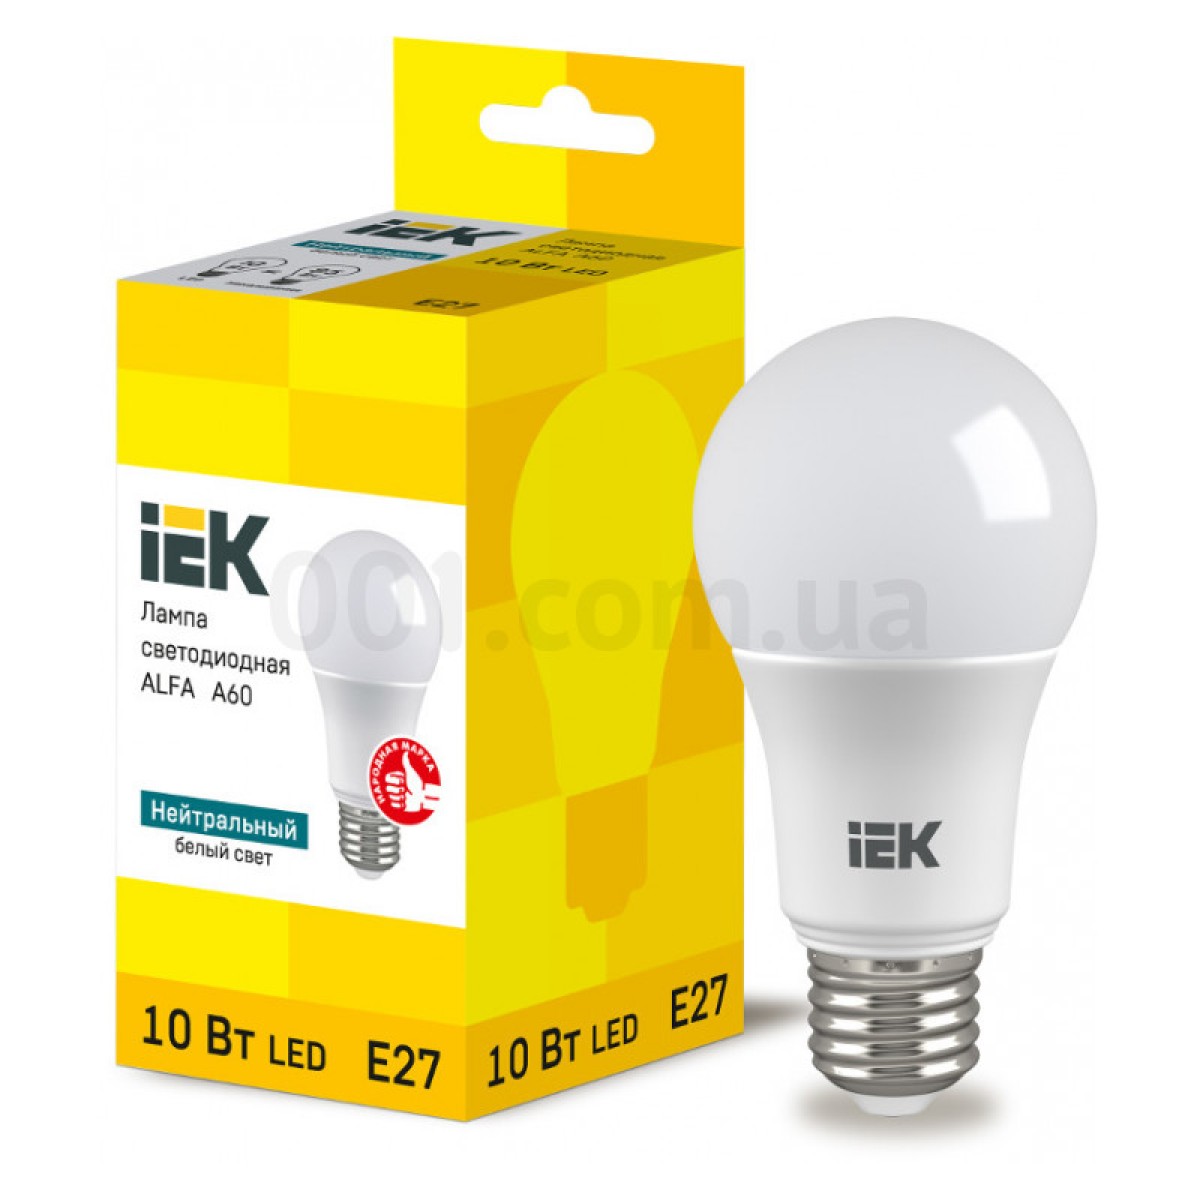 Светодиодная лампа LED ALFA A60 (груша) 10 Вт 230В 4000К E27, IEK 256_256.jpg